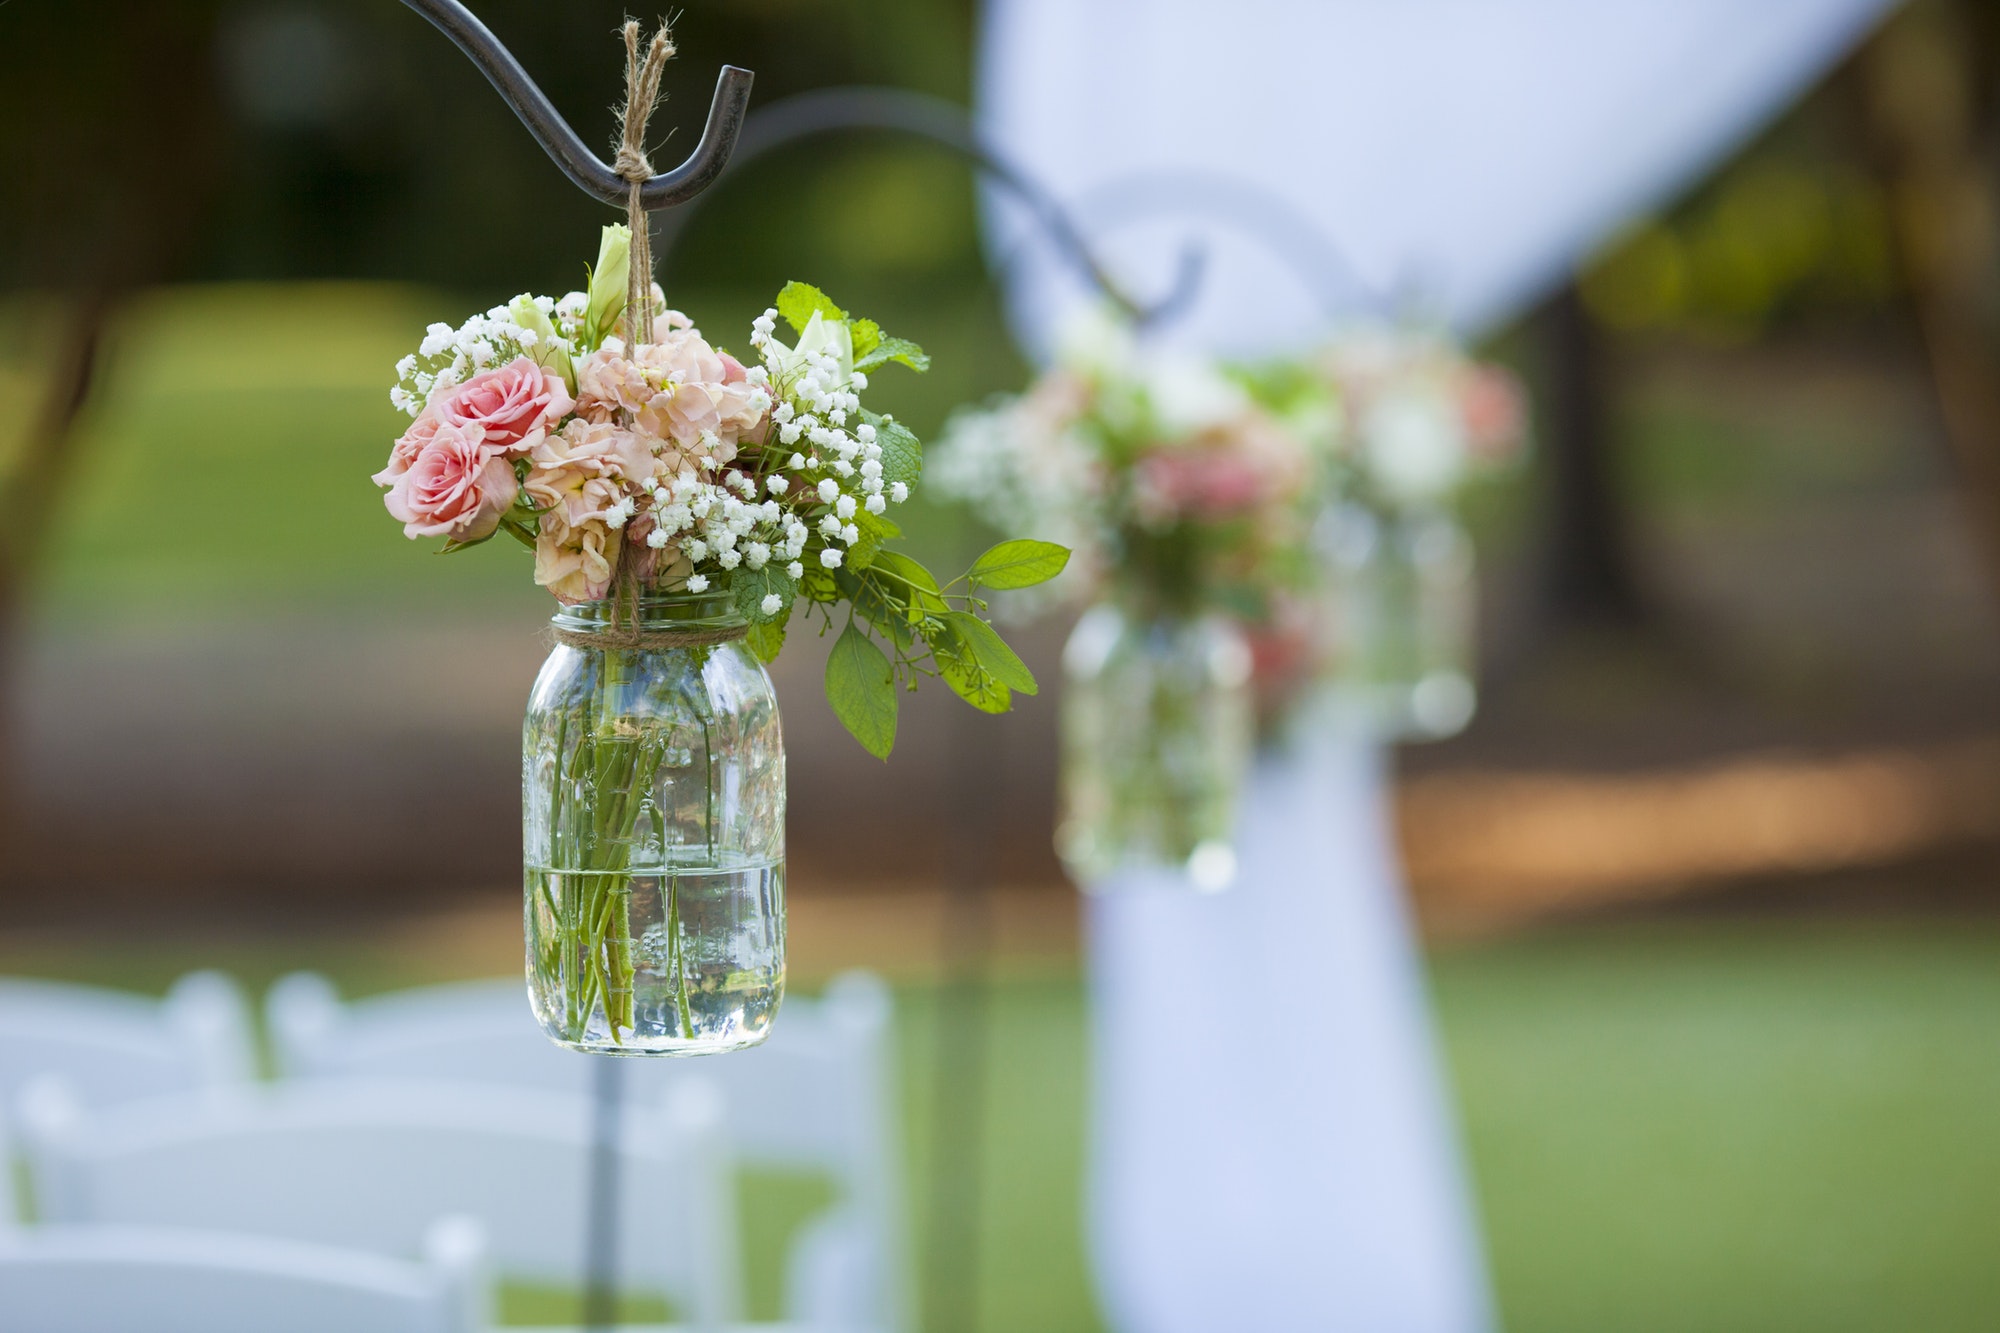 Flowers and mason jar at wedding